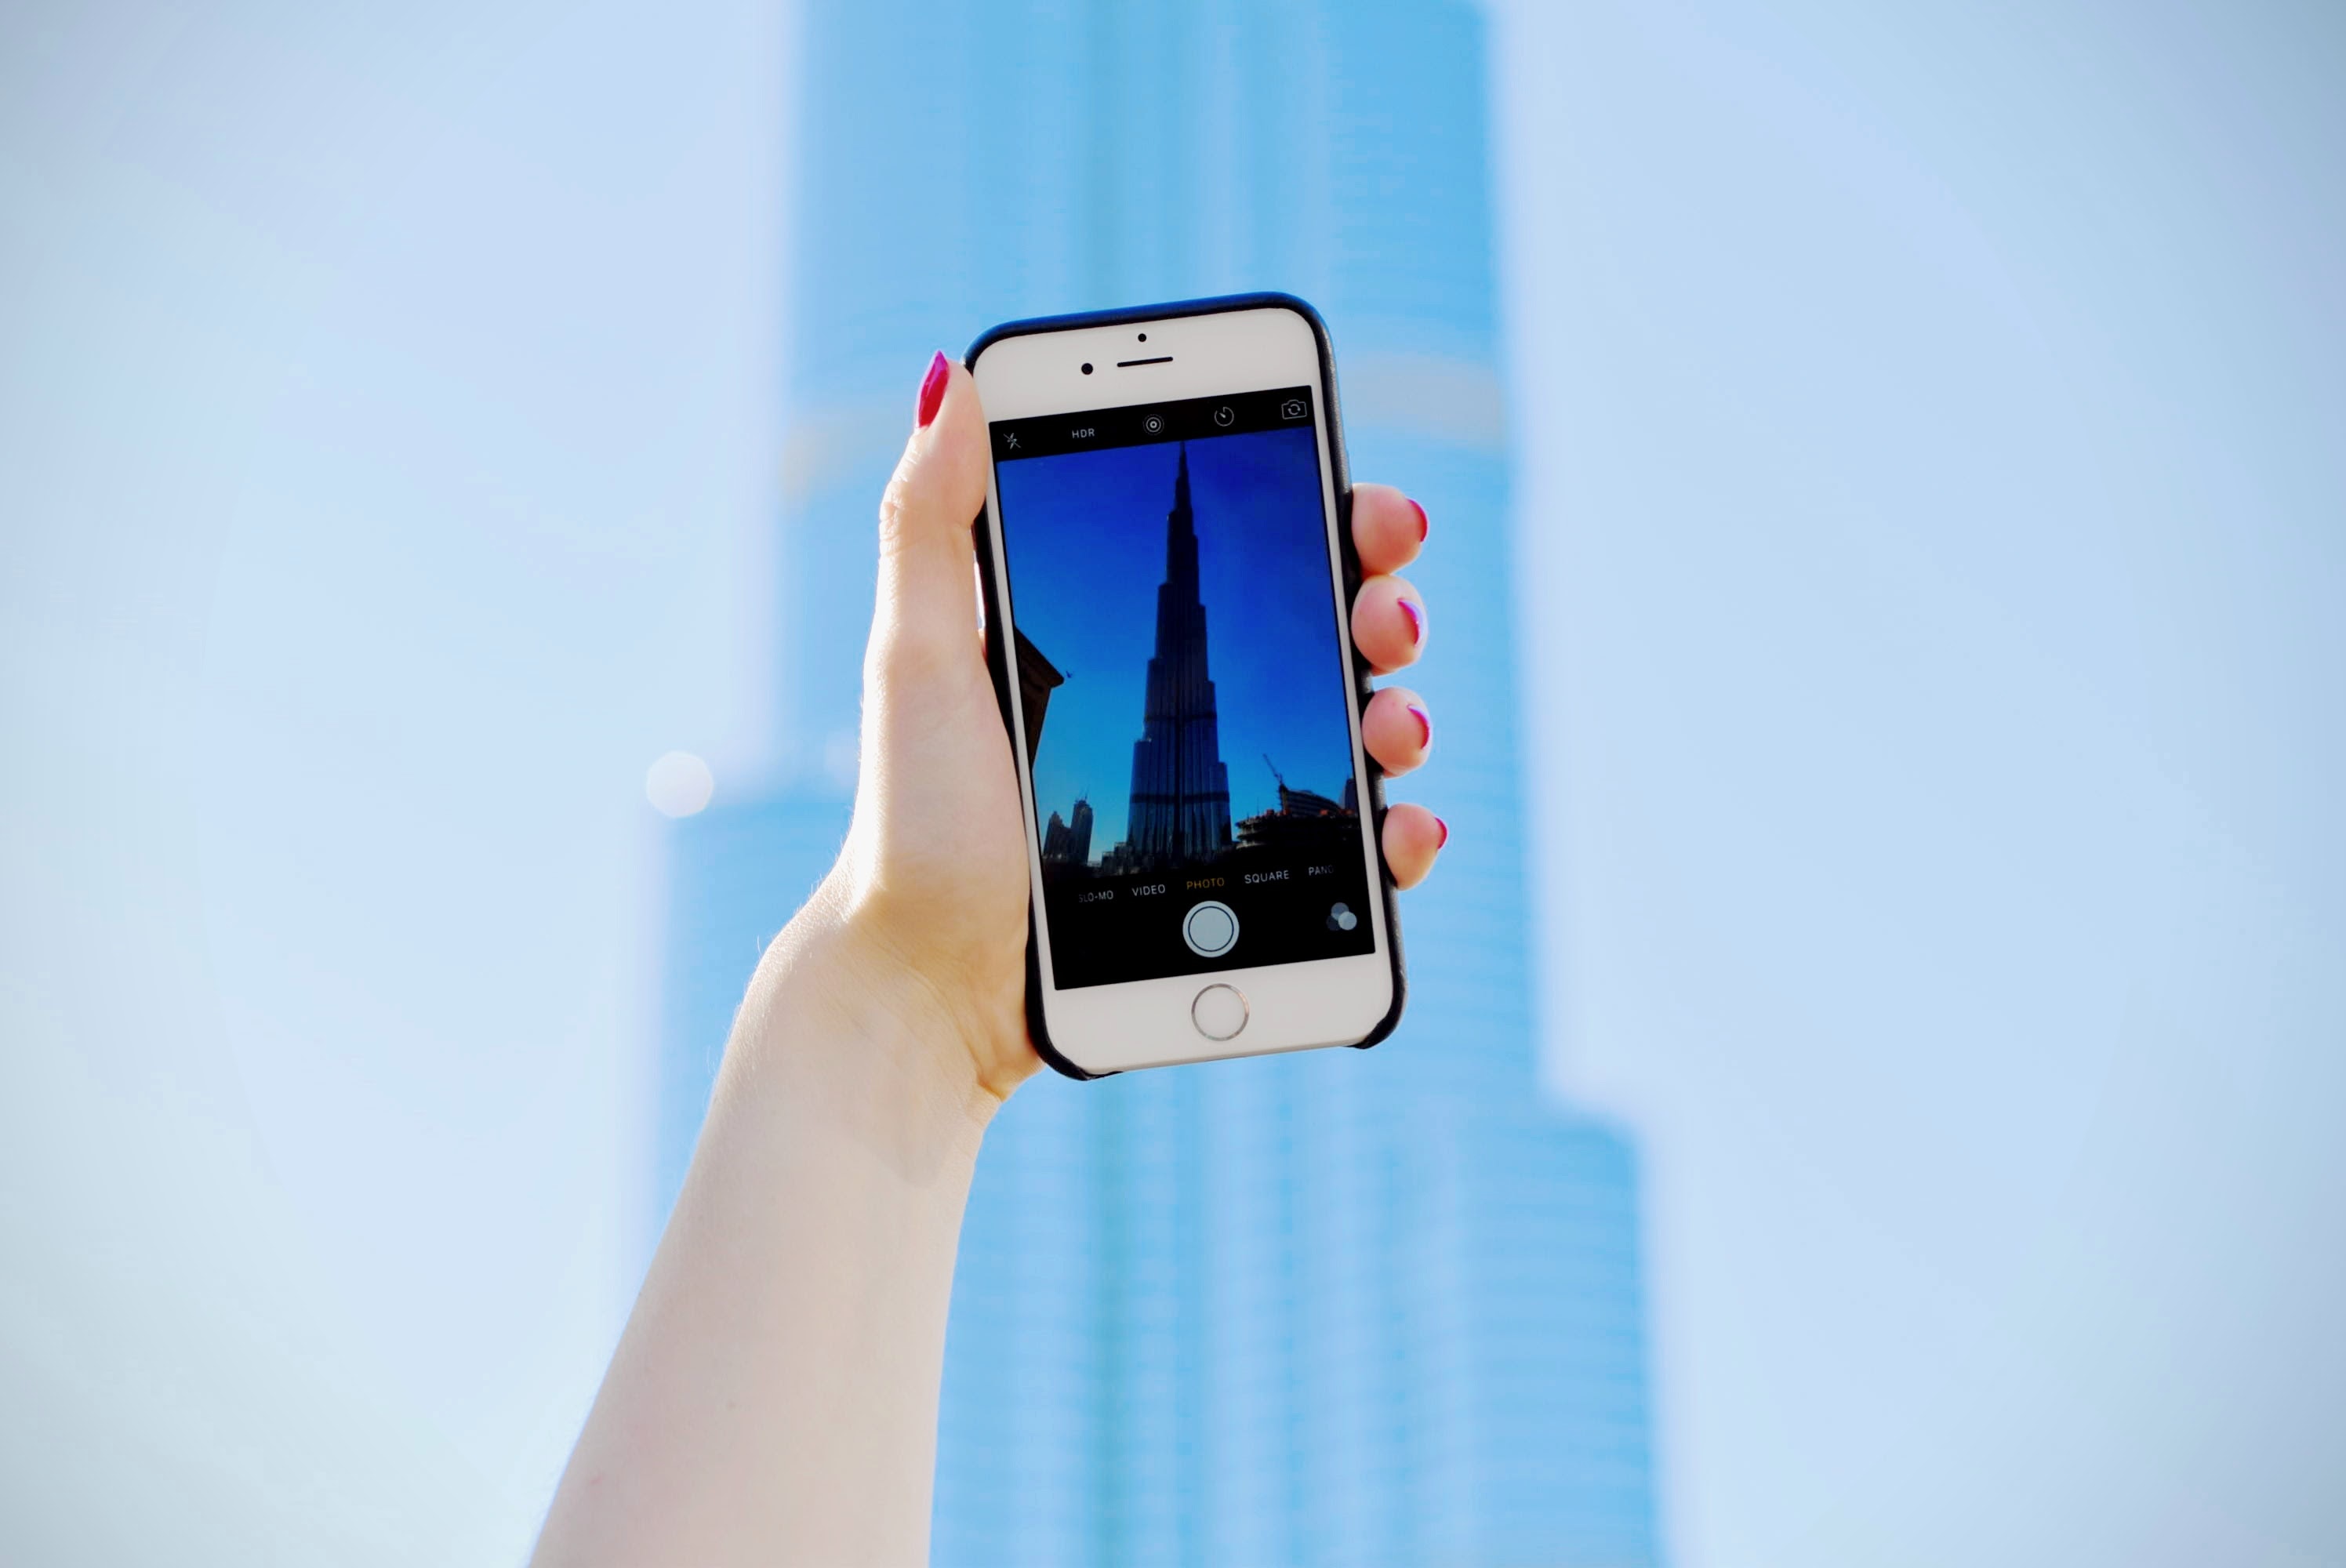 Silver Iphone 6, Building, Burj khalifa, Dubai, Famous landmark, HQ Photo